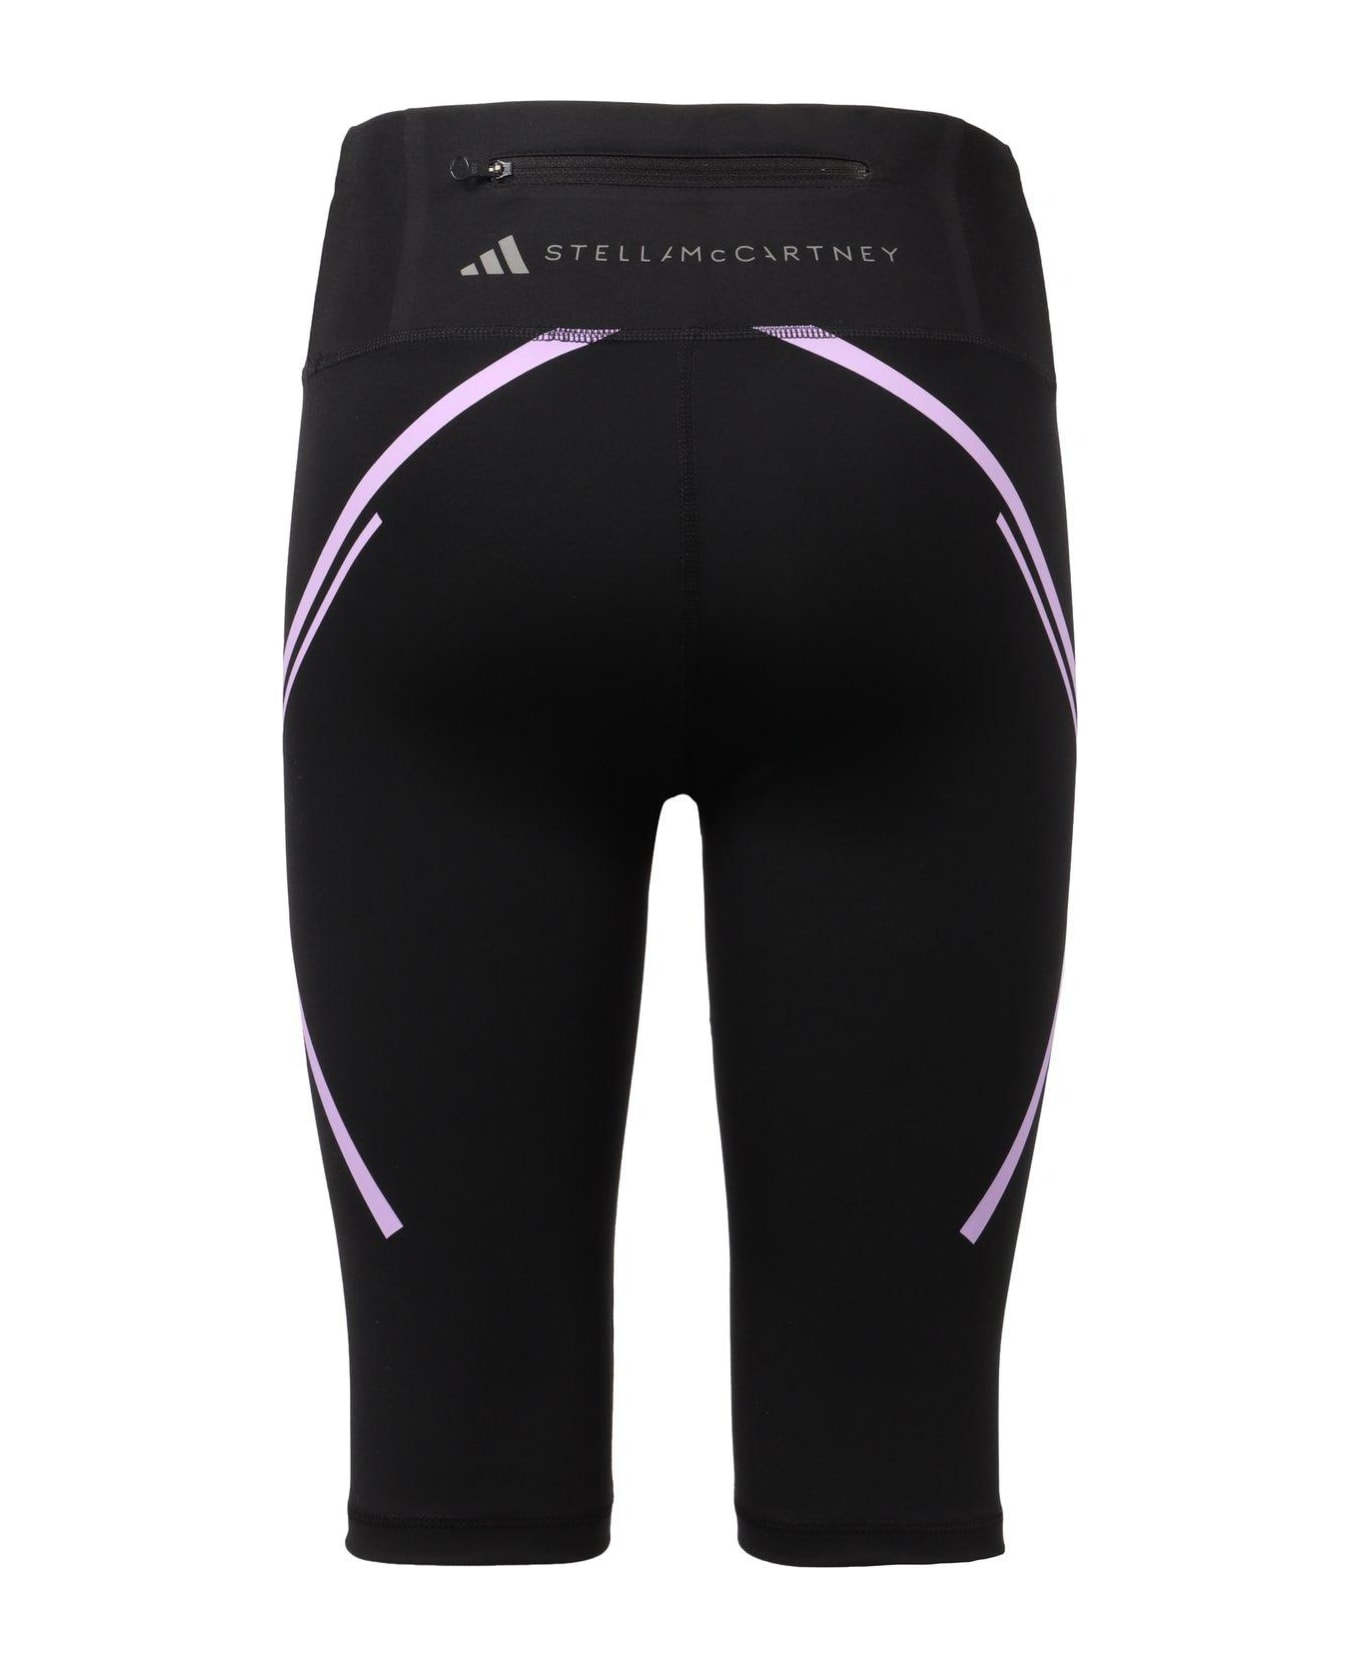 Adidas by Stella McCartney Truepace High-waisted Cycling Shorts - BLACK/PURPLE